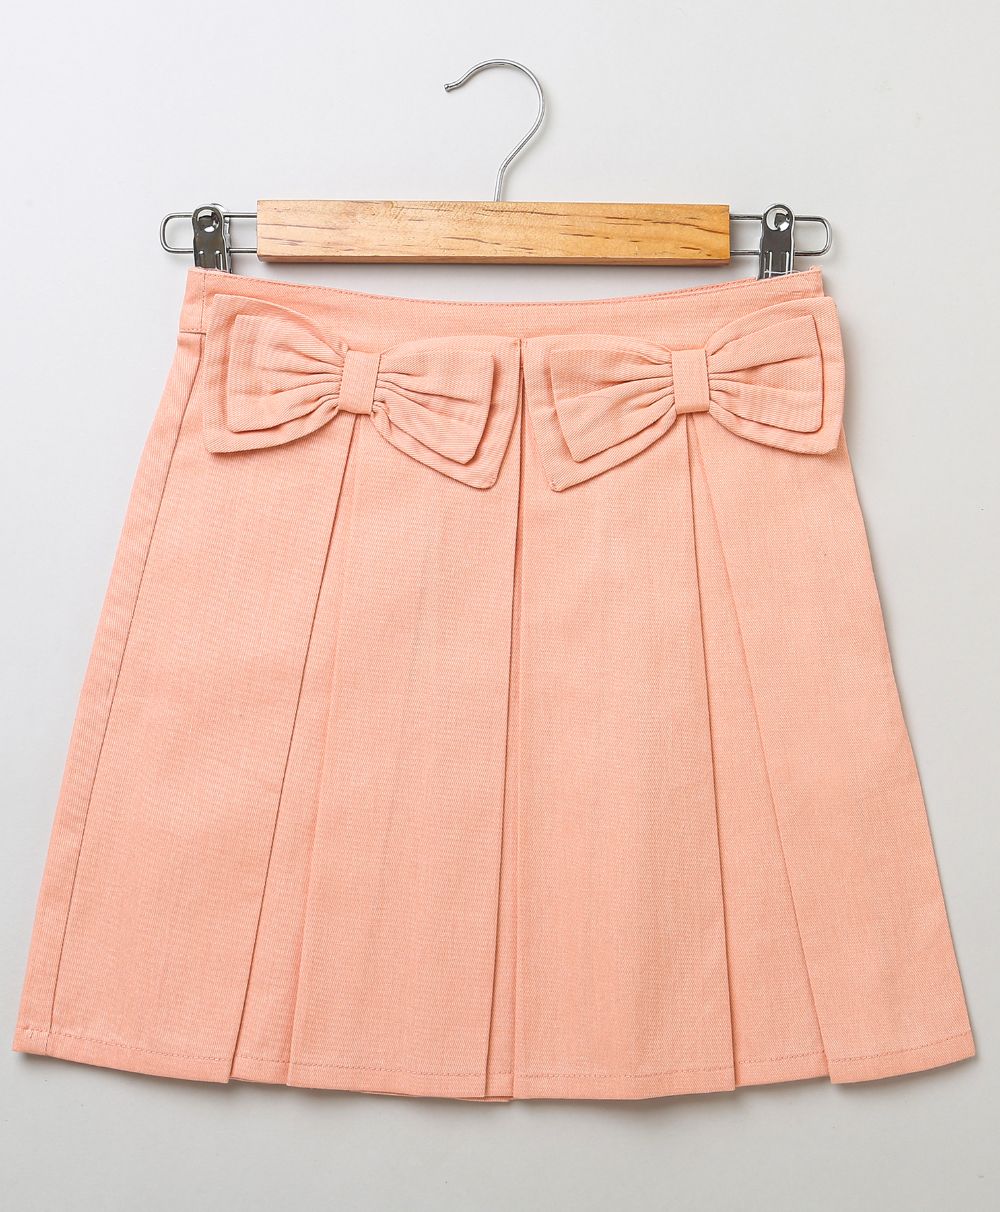 White Ruffled Blouse & Striped Peach Skirt